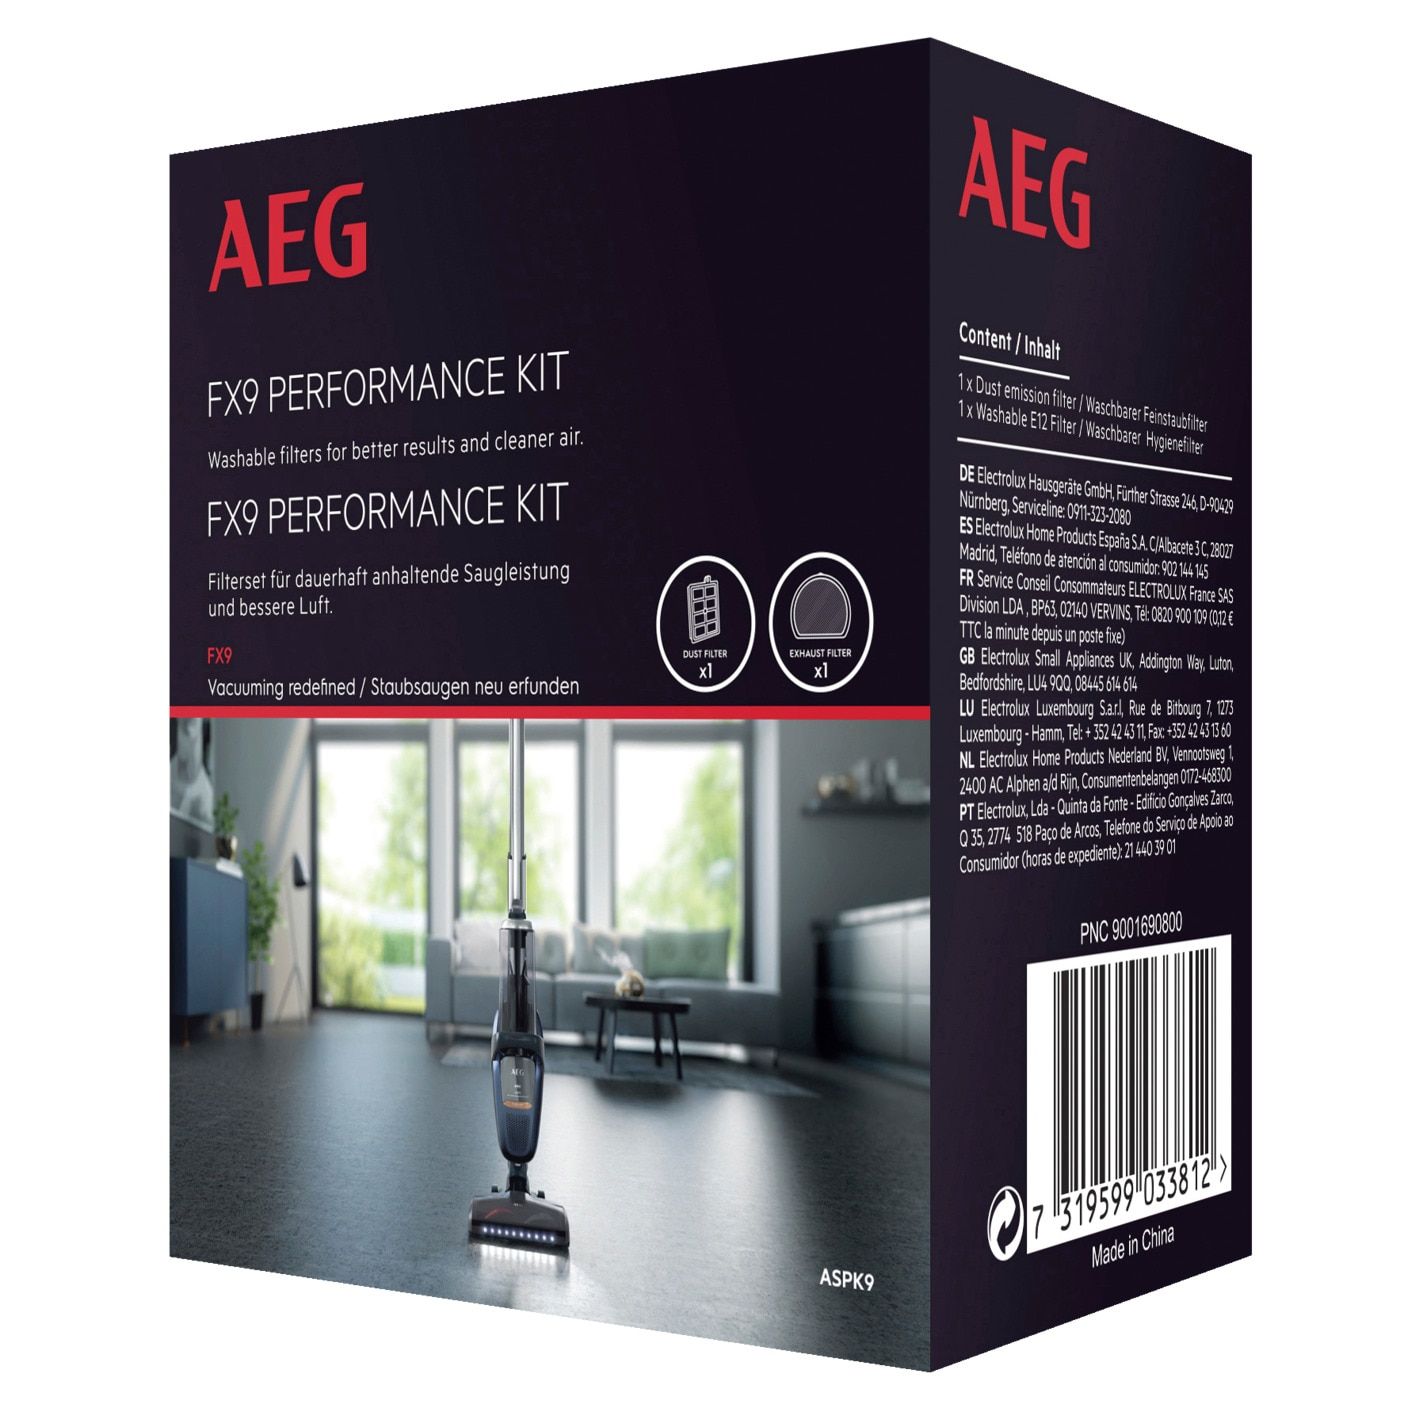 AEG ASPK9 FX9 Performance Kit